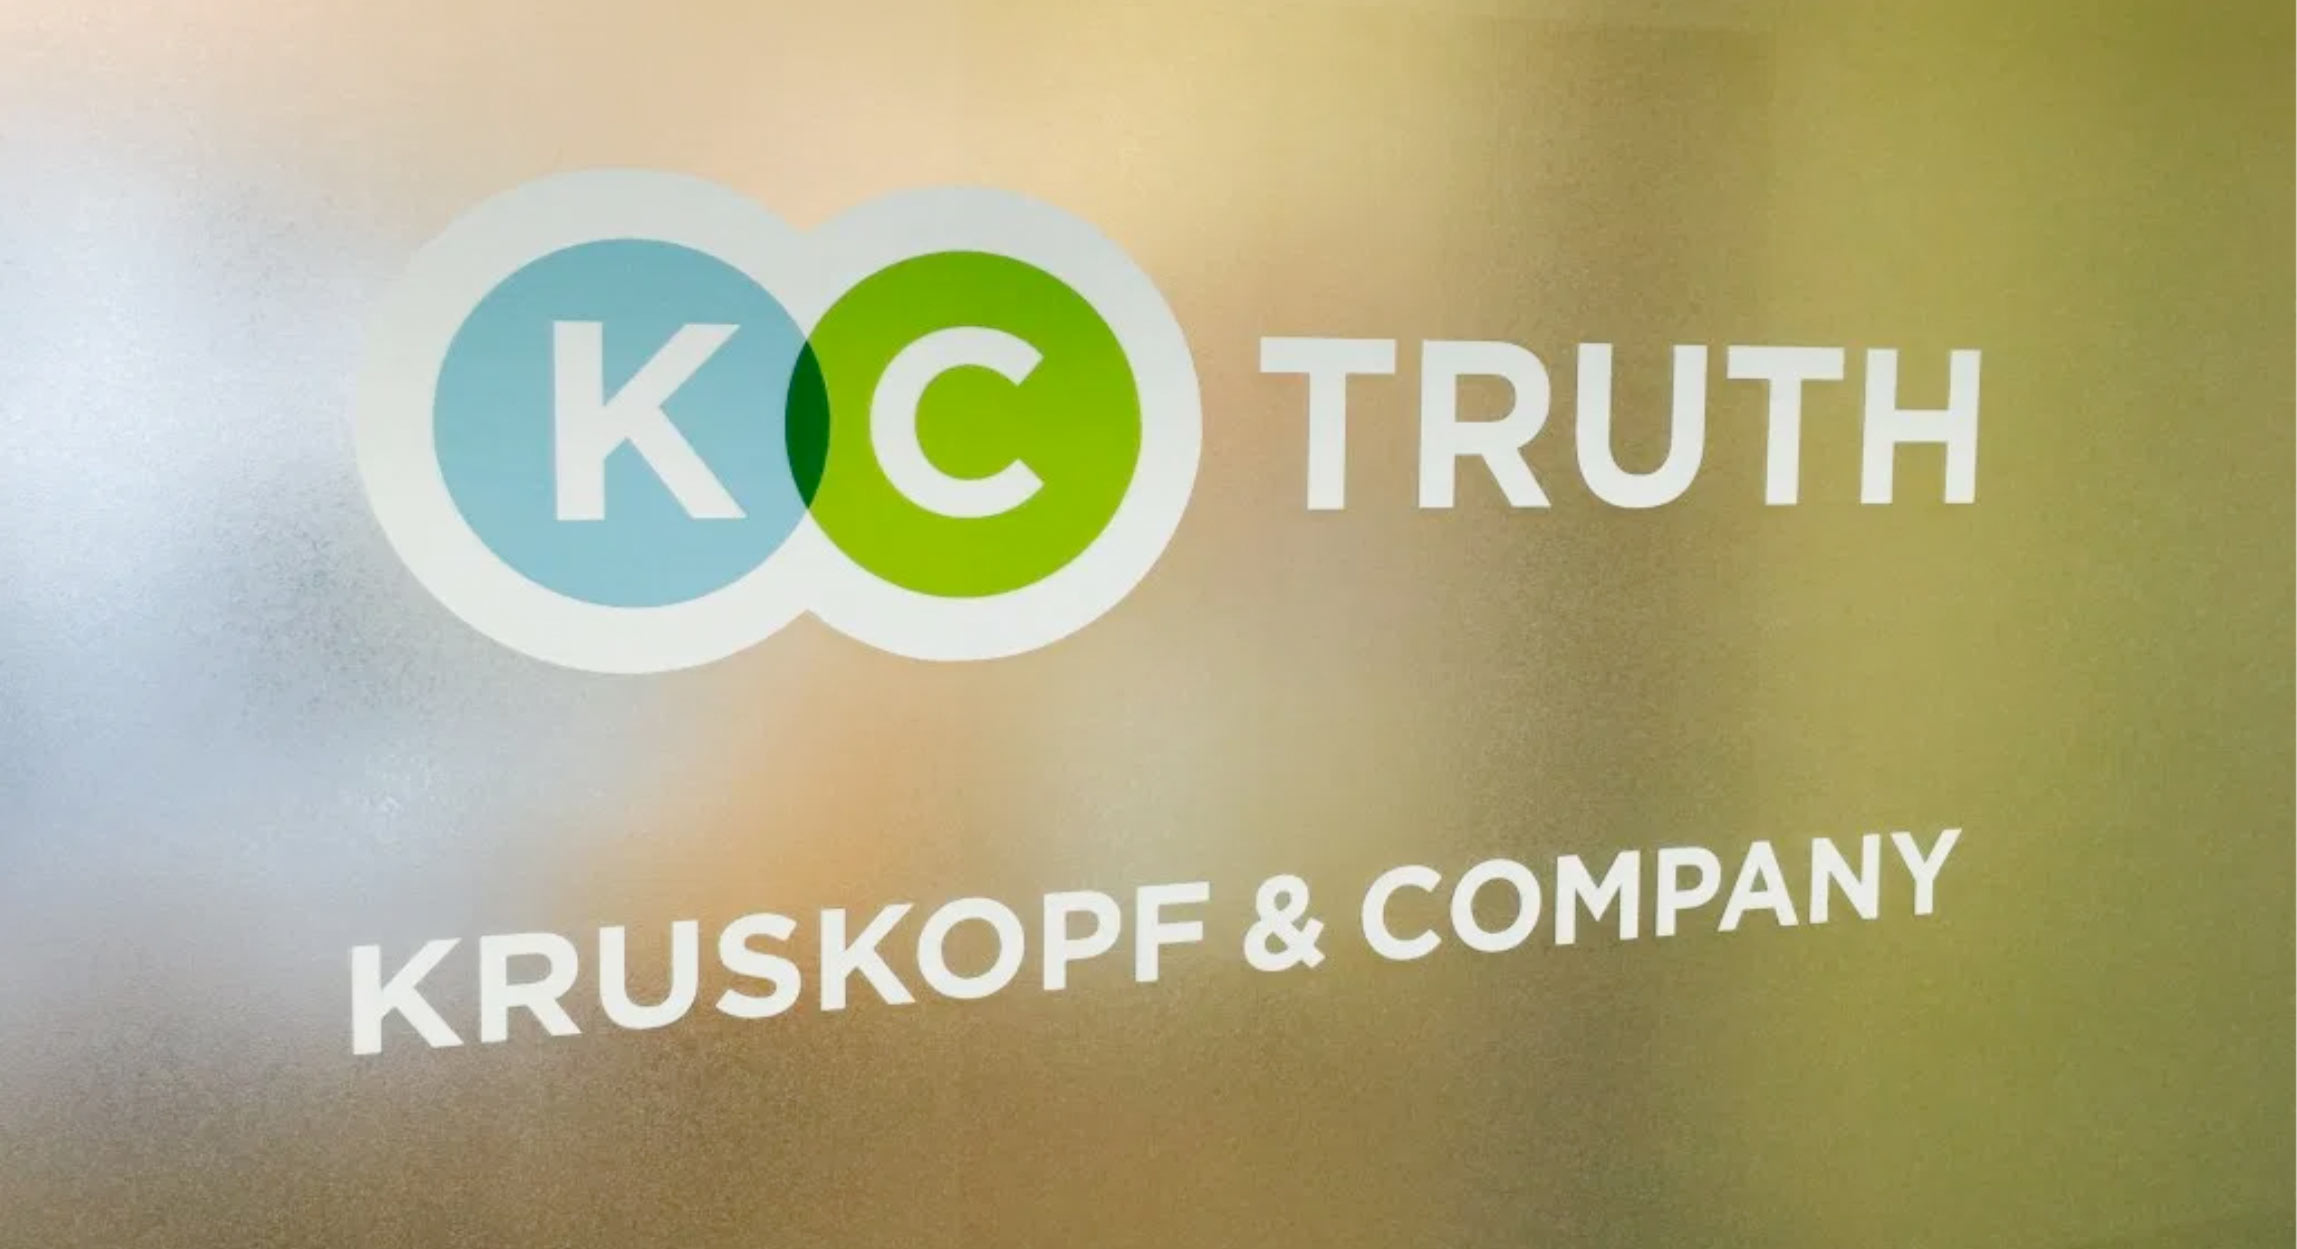 Kruskopf & Company